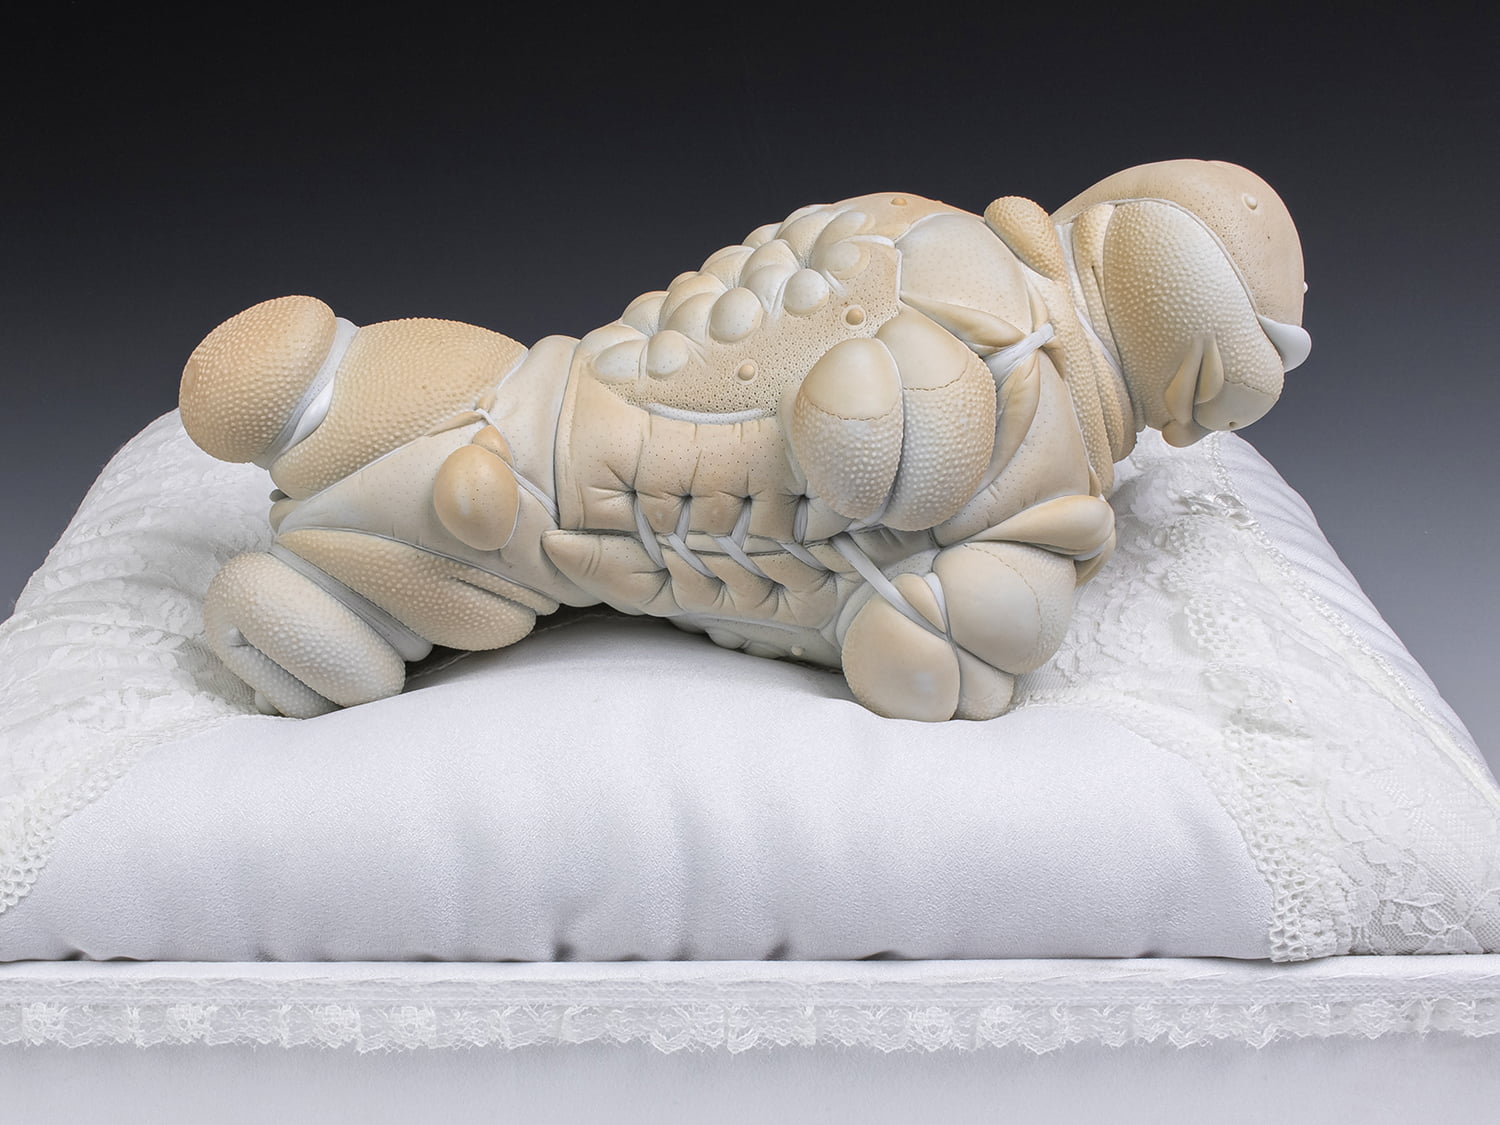 Jason Briggs "Olympia". porcelain, hair, and mixed media sculpture ceramics.